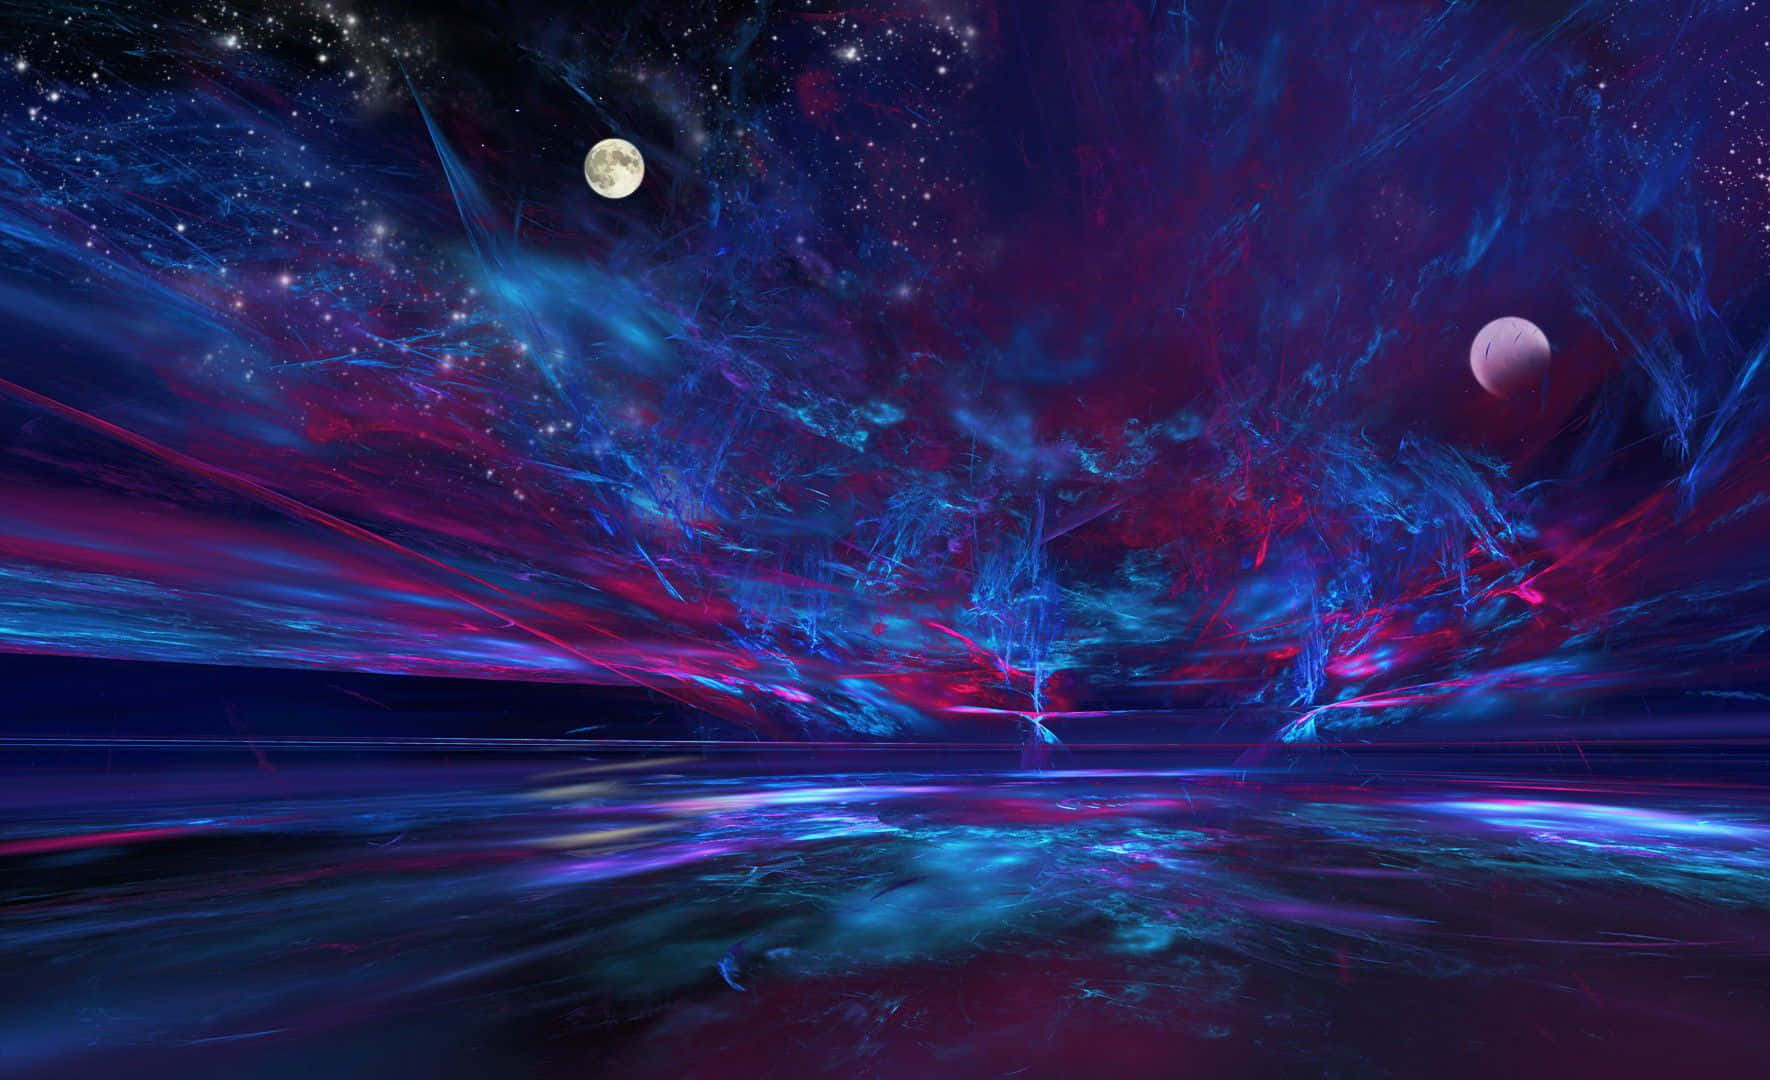 Cosmic Abstract Landscape.jpg Wallpaper